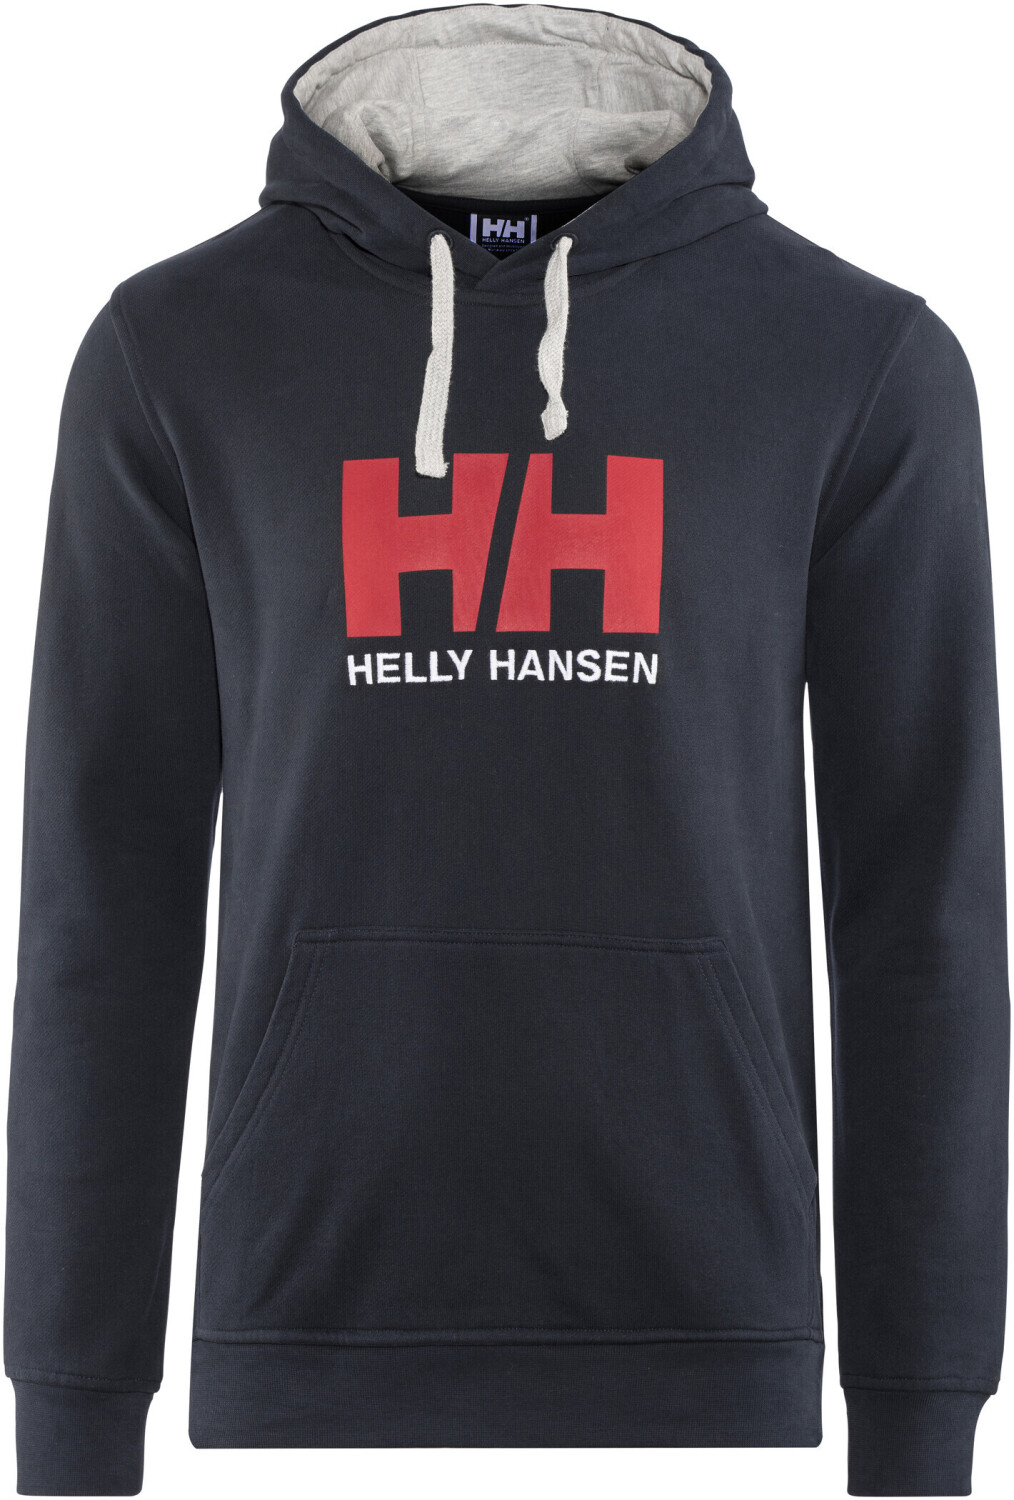 Sudadera con capucha Helly Hansen Logo azul marino gris rojo